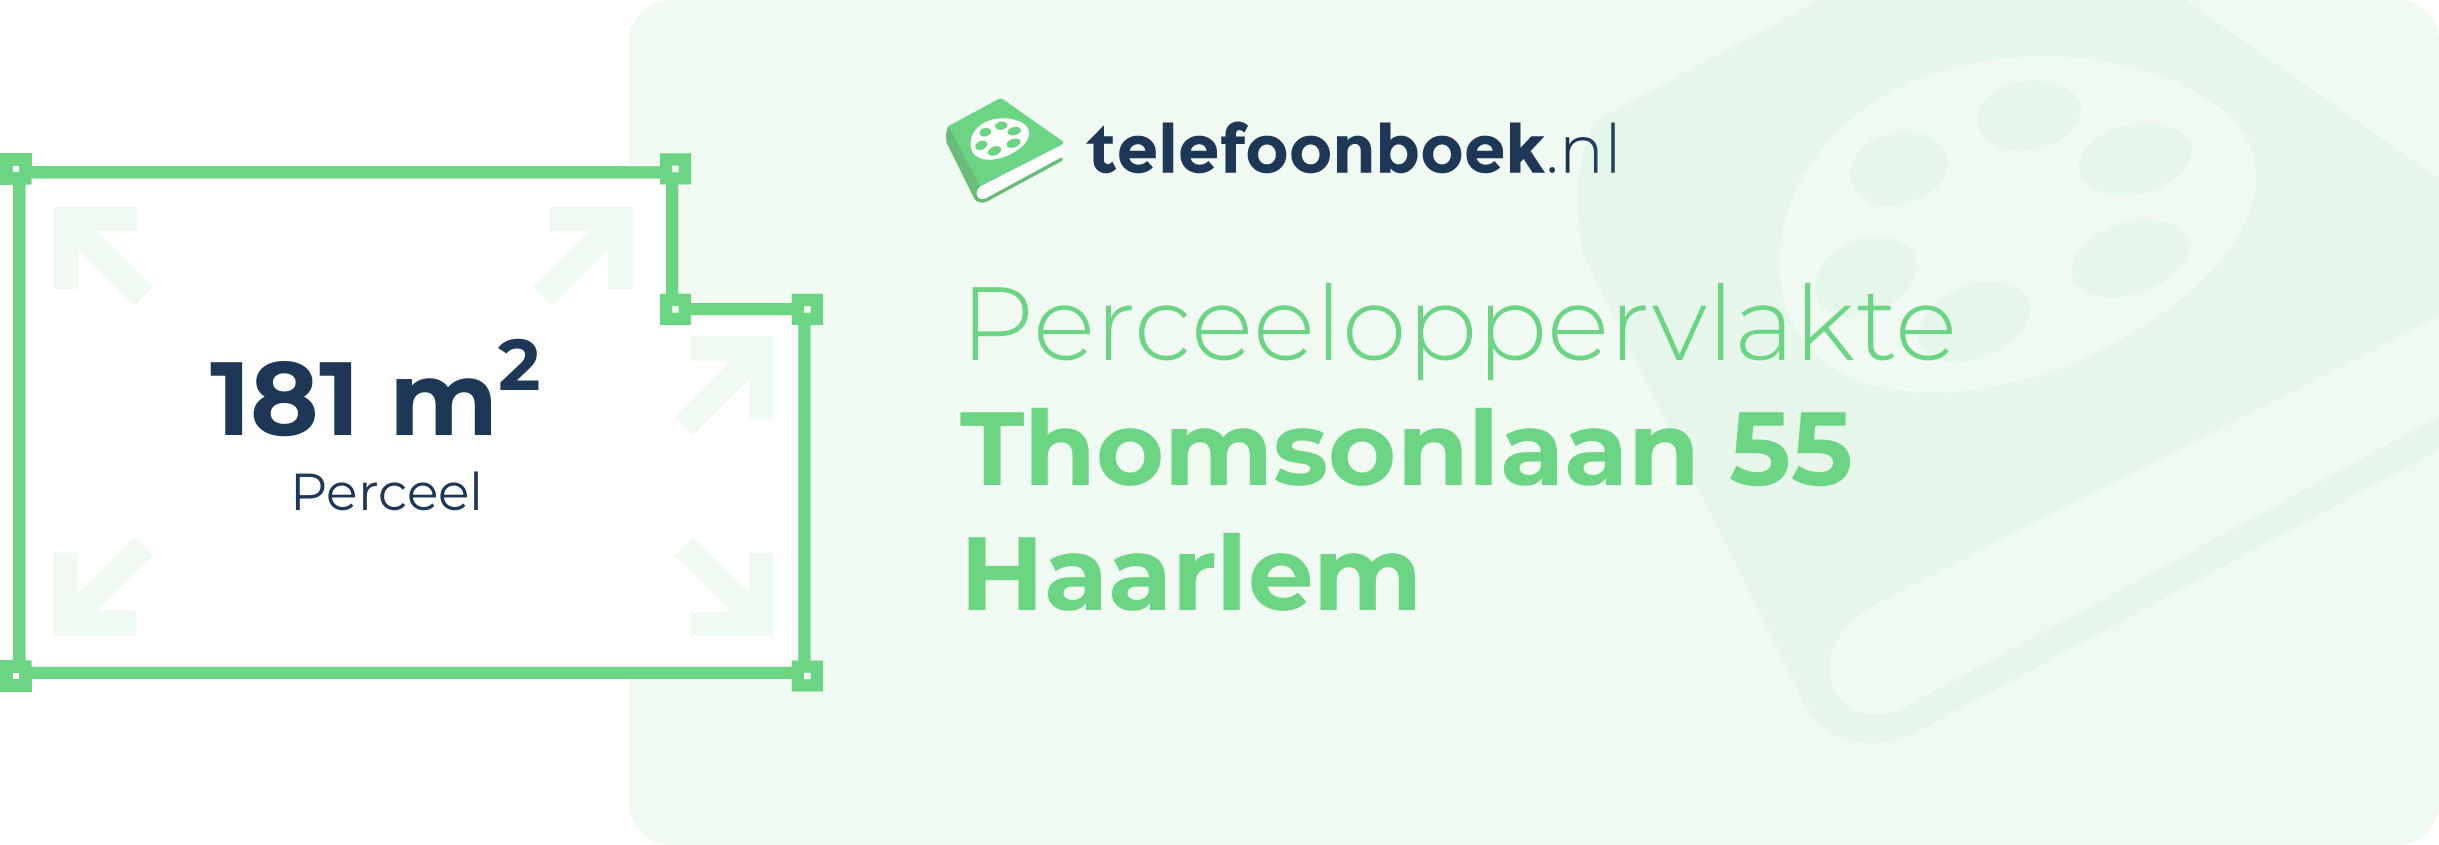 Perceeloppervlakte Thomsonlaan 55 Haarlem